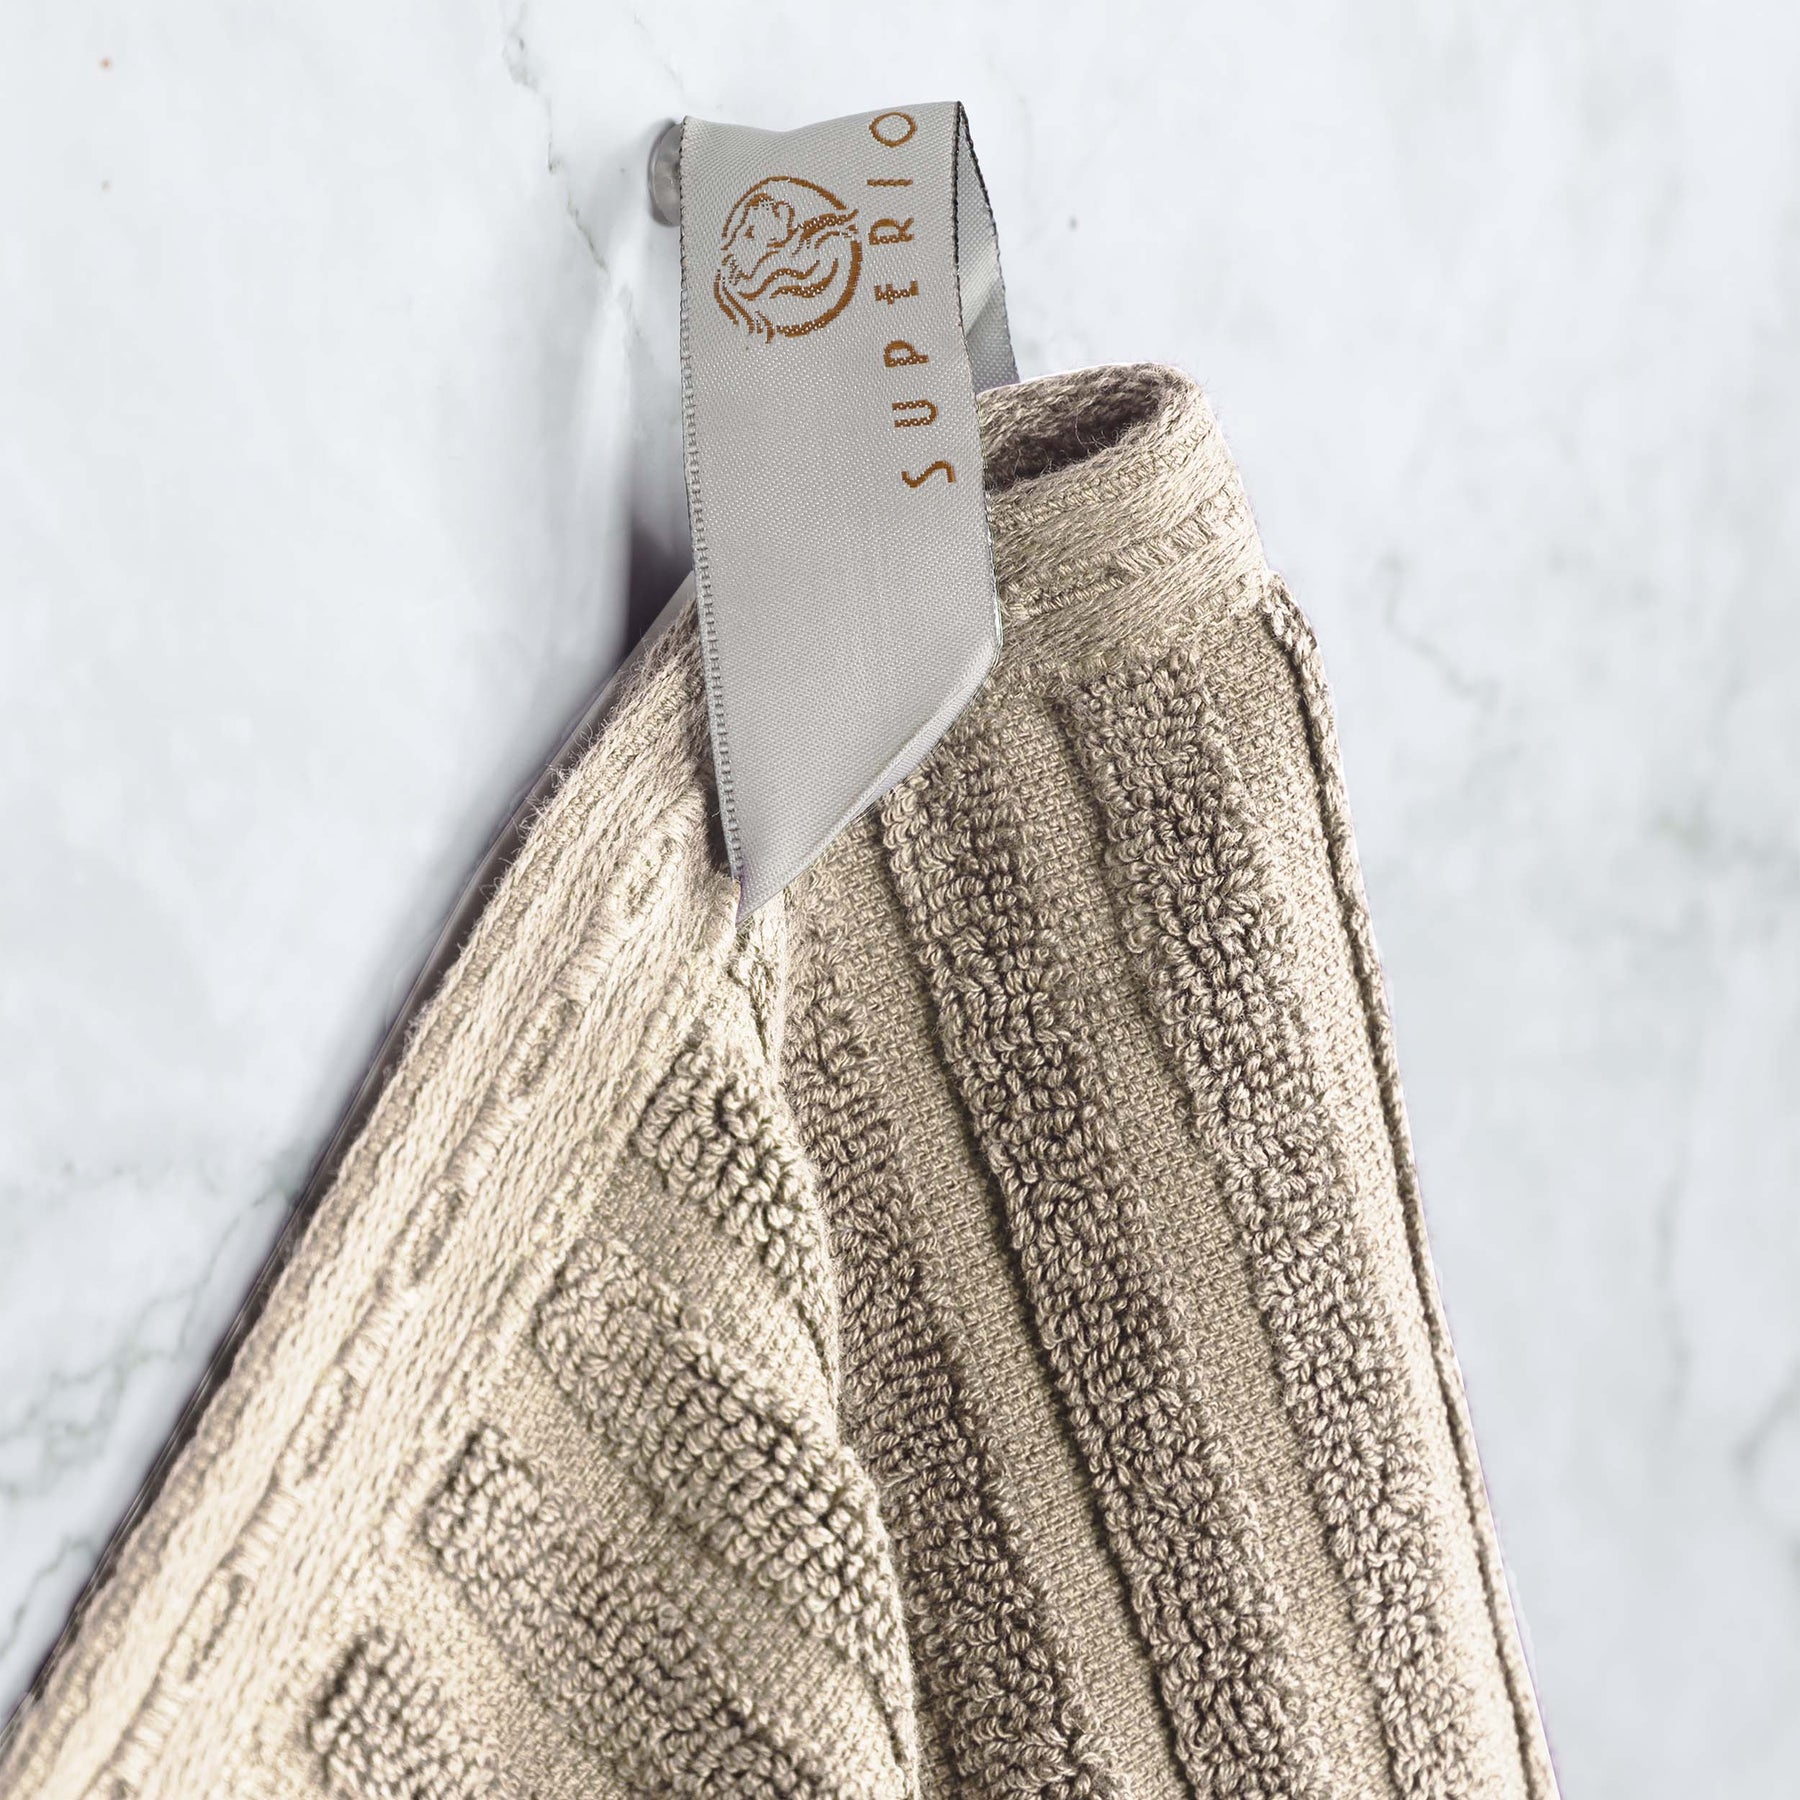 Soho Ribbed Cotton Absorbent Face Towel / Washcloth Set of 12 - Ivory